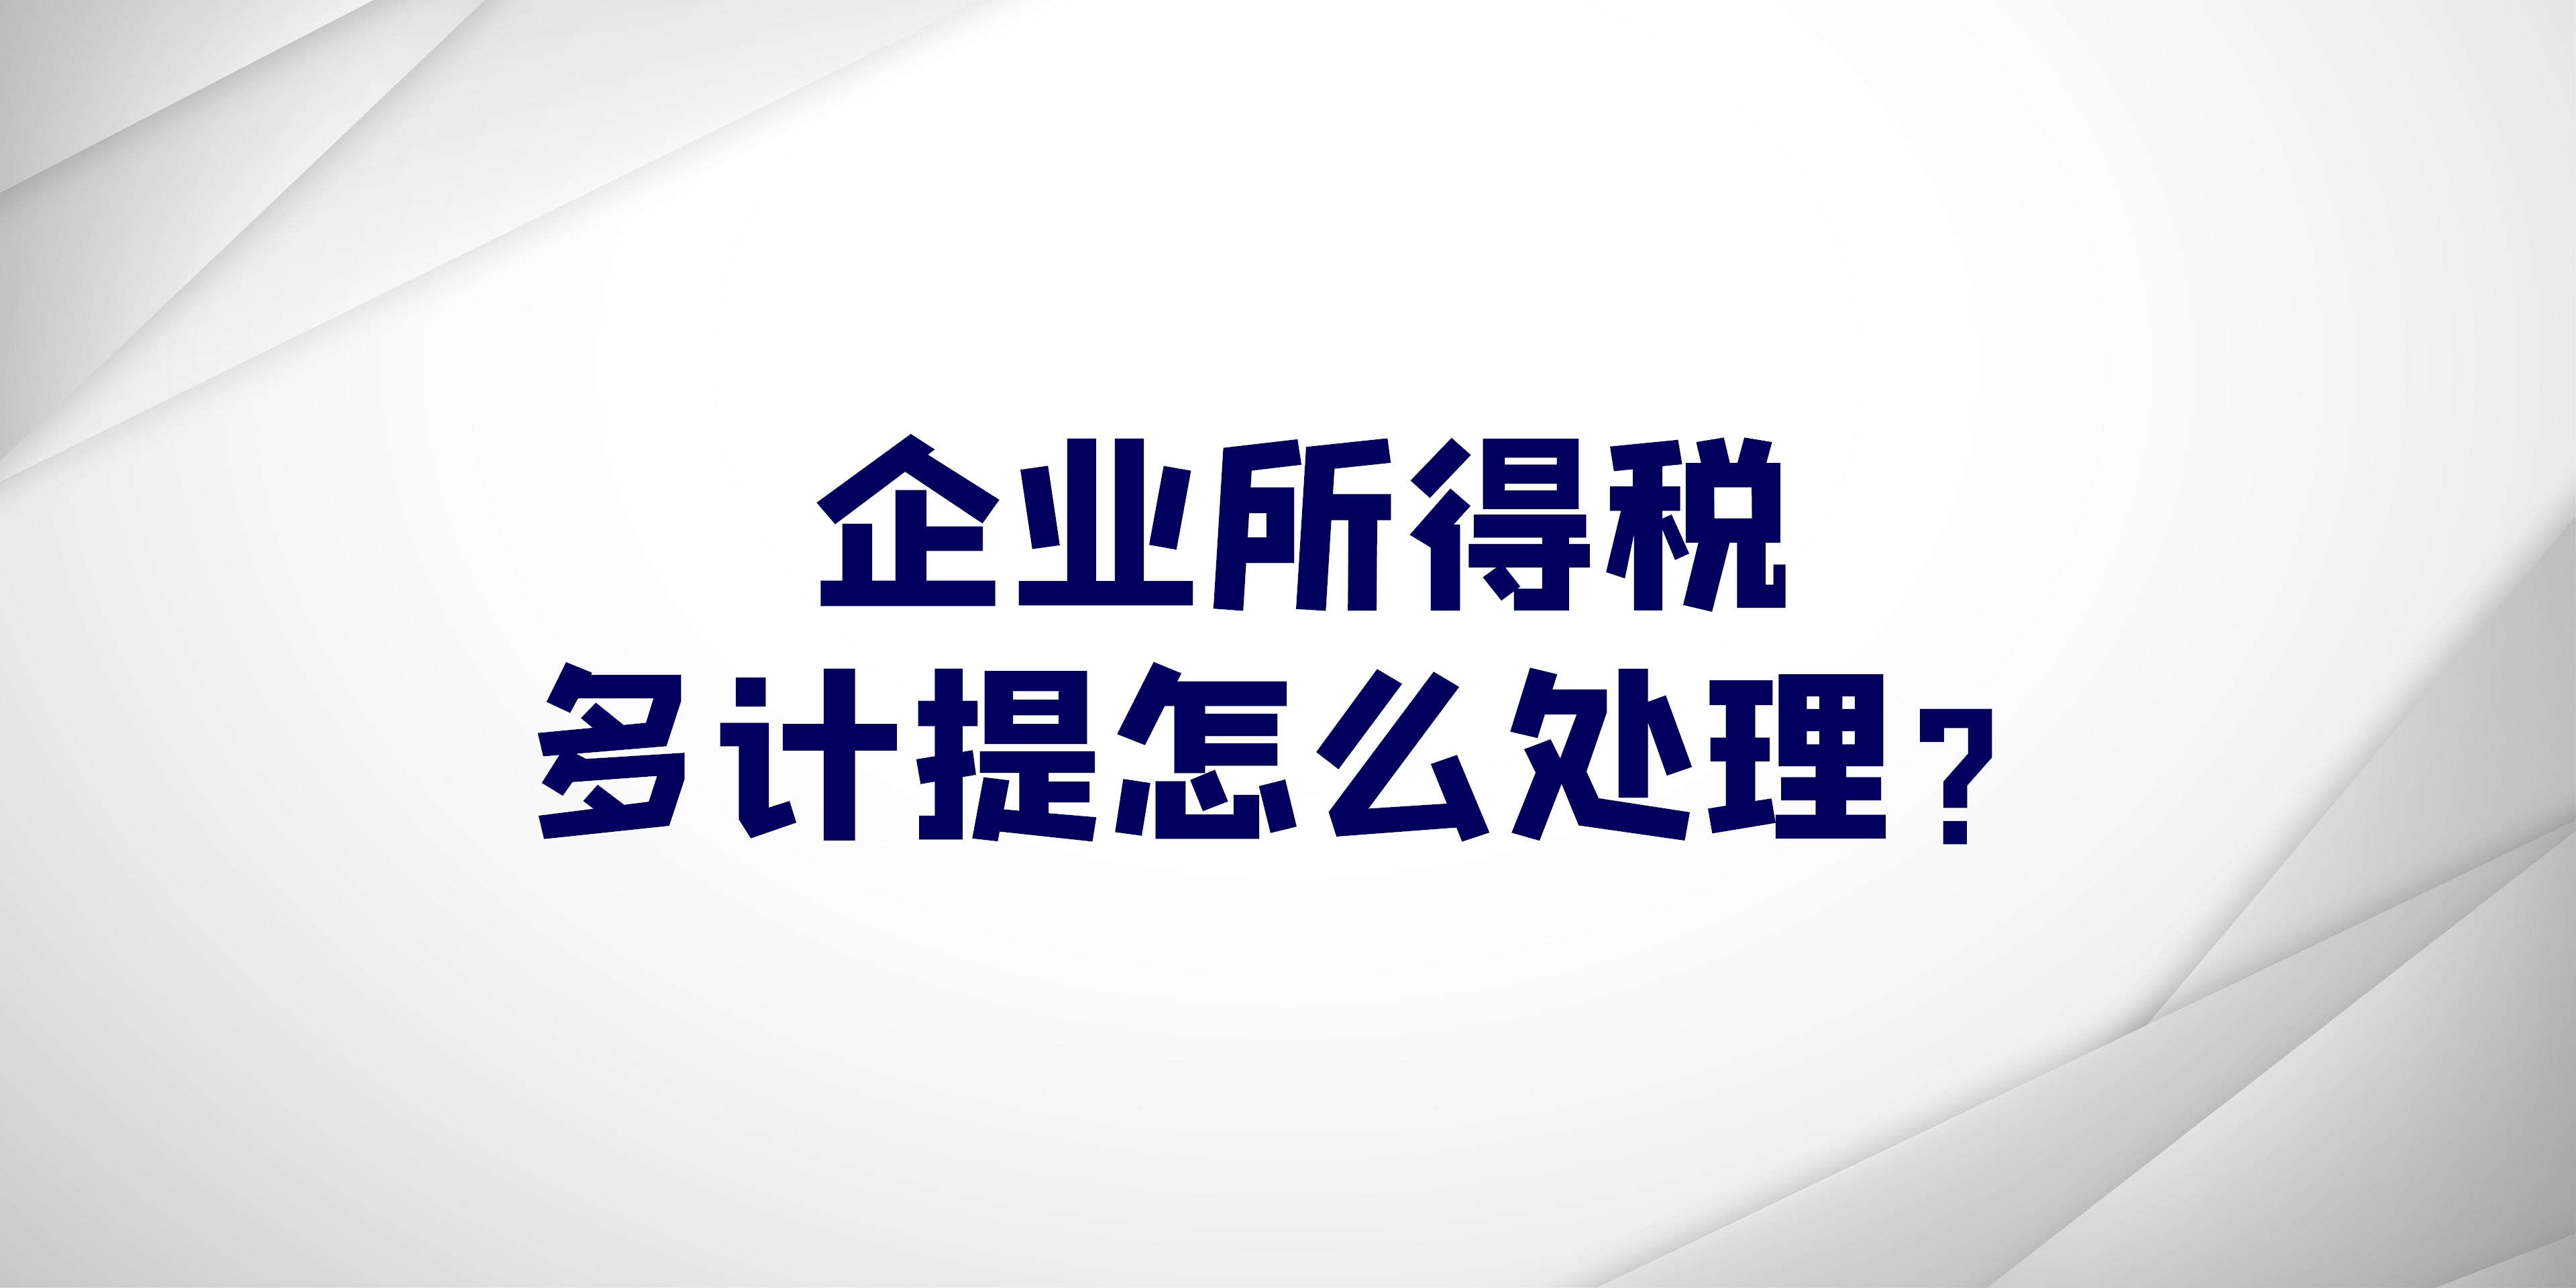 kk体育平台app官方下载武汉个人所得税申报指南 - 武汉本地宝